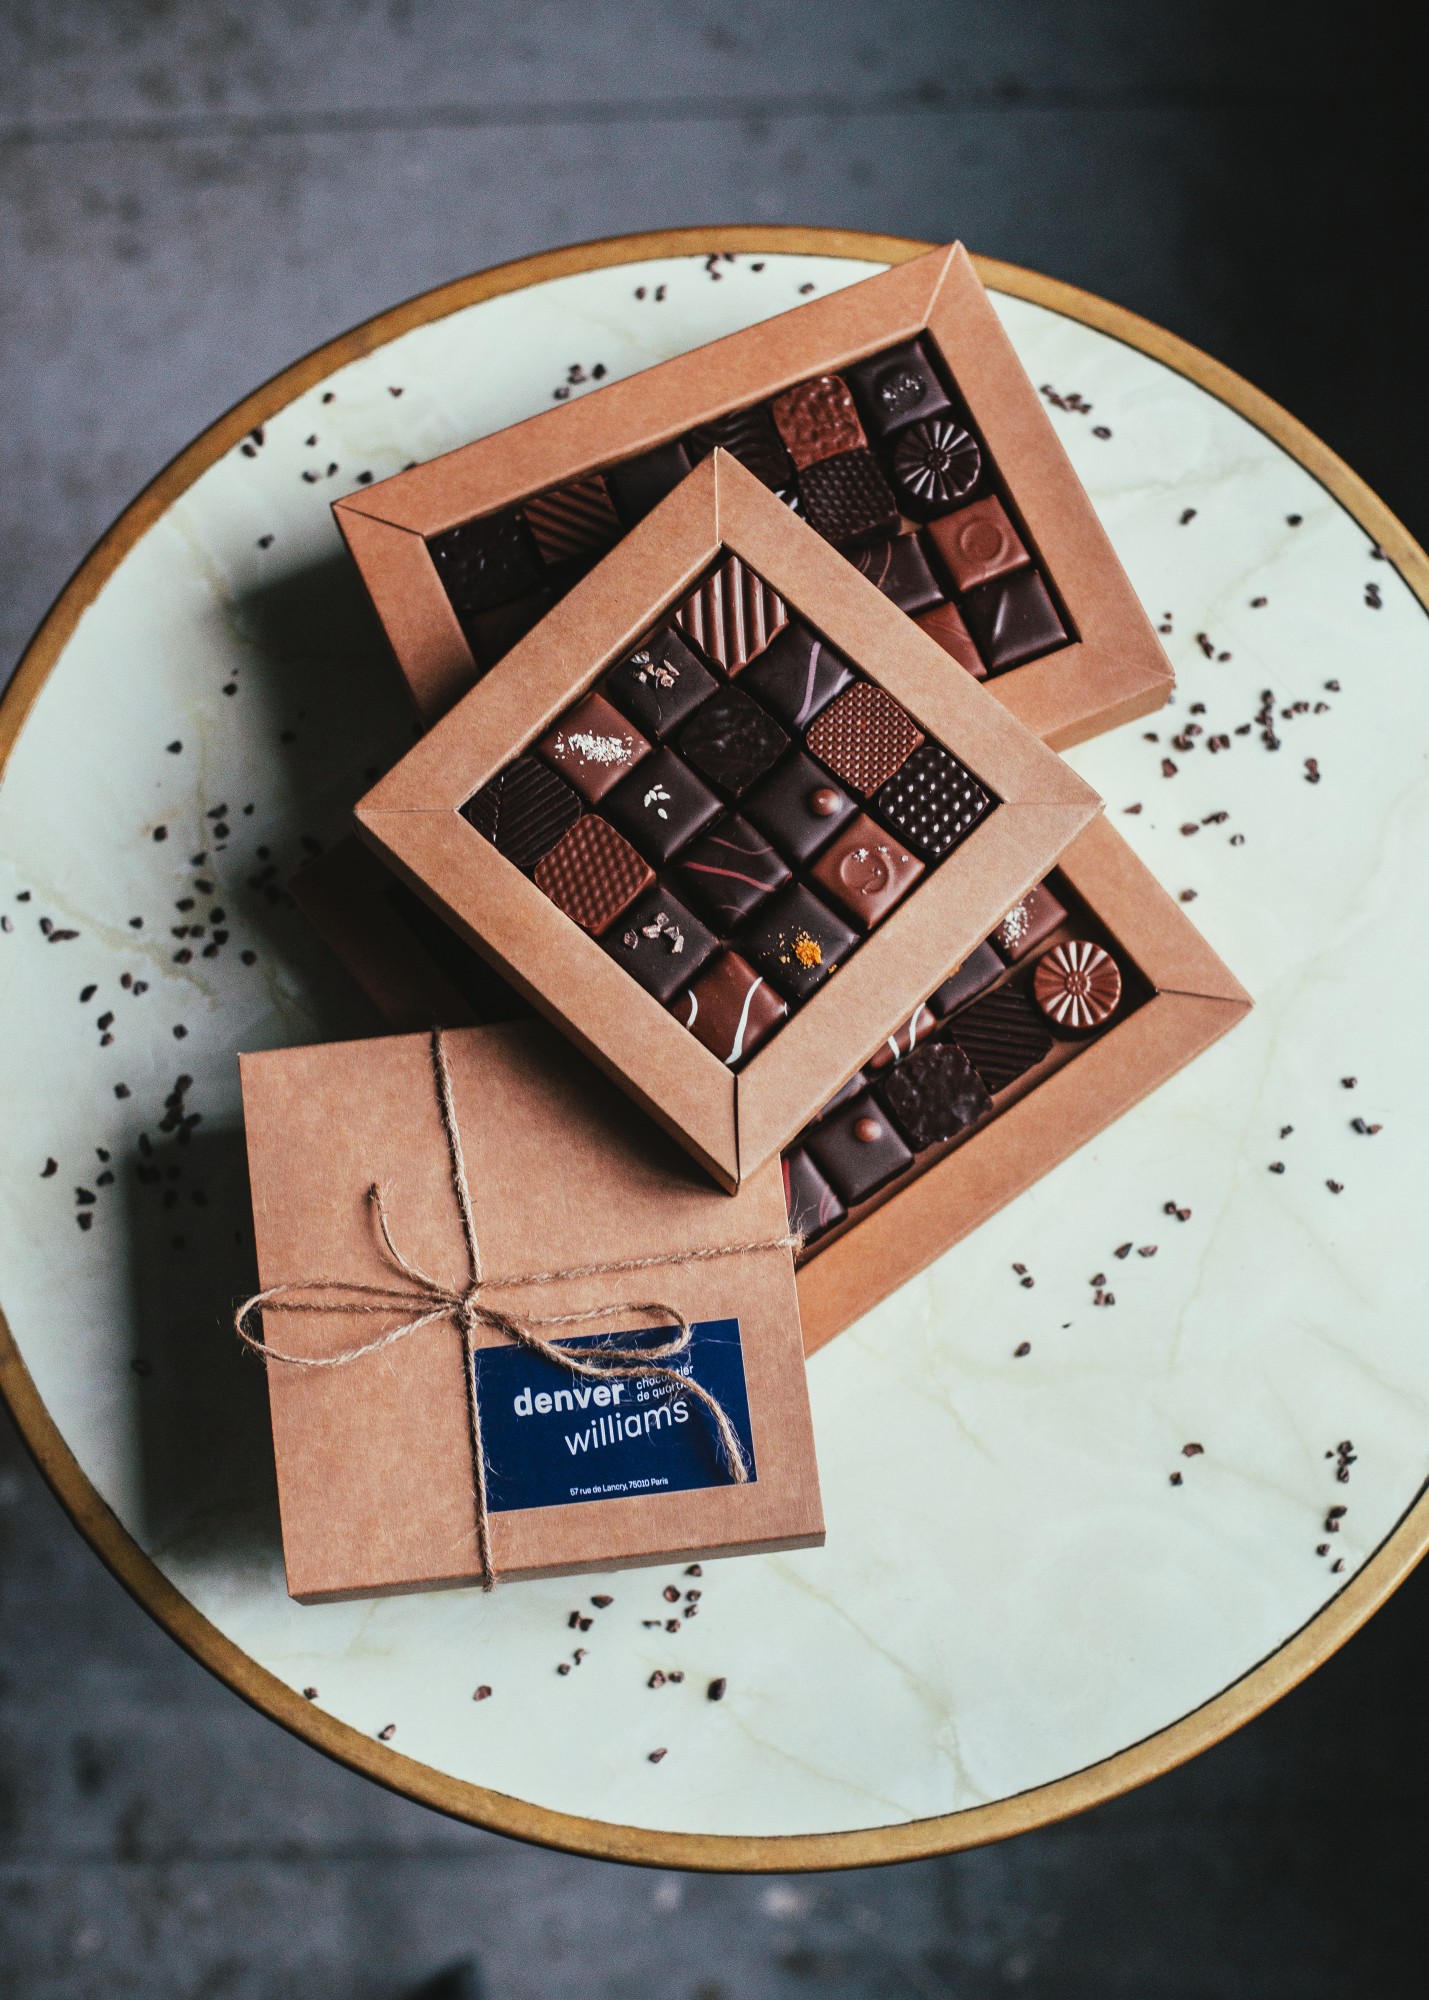 bonbon-au-chocolat_praline_ganache_chocolat-au-lait_noir_praline_lorrainehellwig__48b2321hi_res